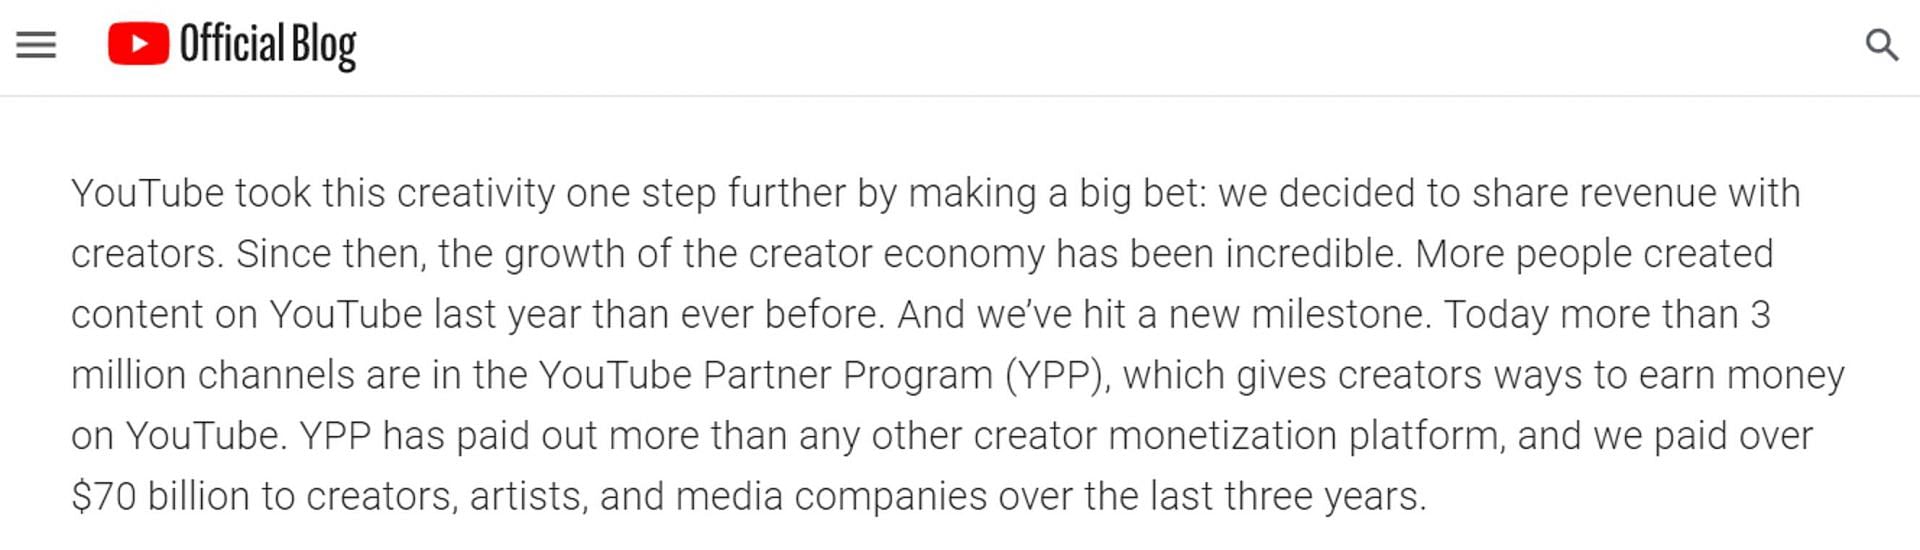 YouTube&#039;s CEO shares platform&#039;s revenue stats (Image via YouTube Blog)